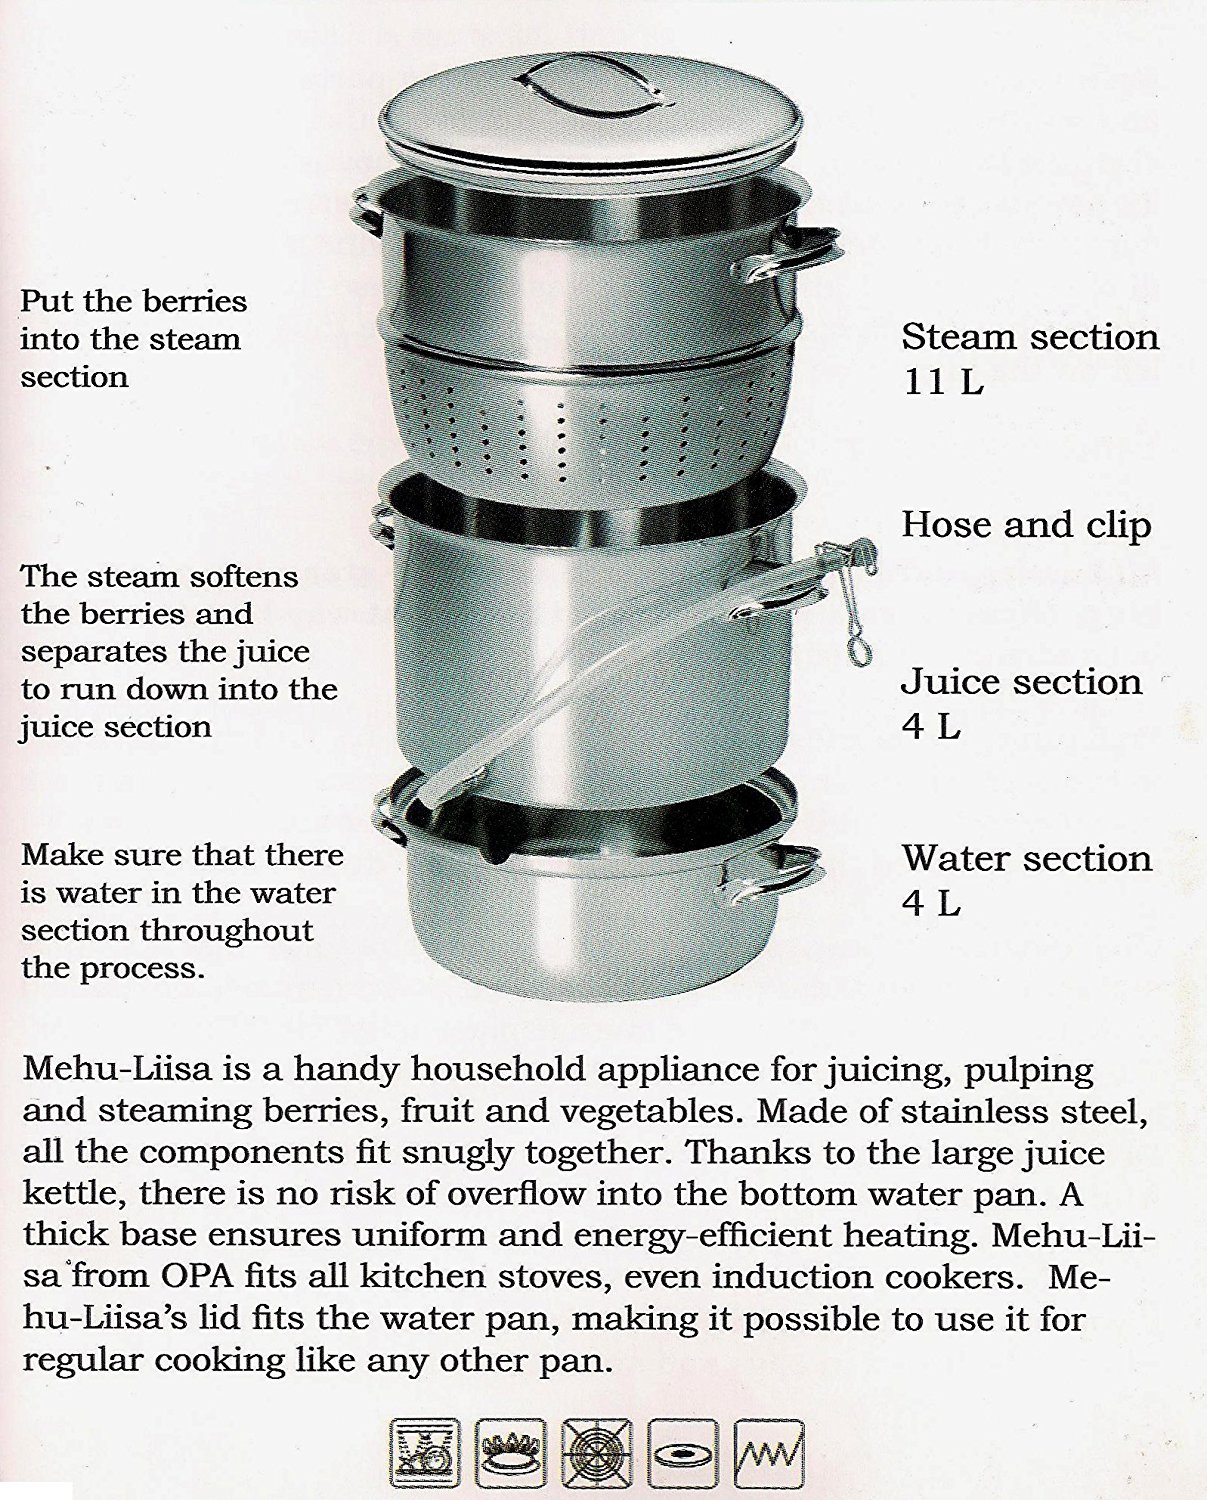 https://www.plantbasedpros.com/wp-content/uploads/2018/03/Mehu-Liisa-Stainless-Steel-Steam-Juicer-Food-Steamer-11-liter-3.jpg